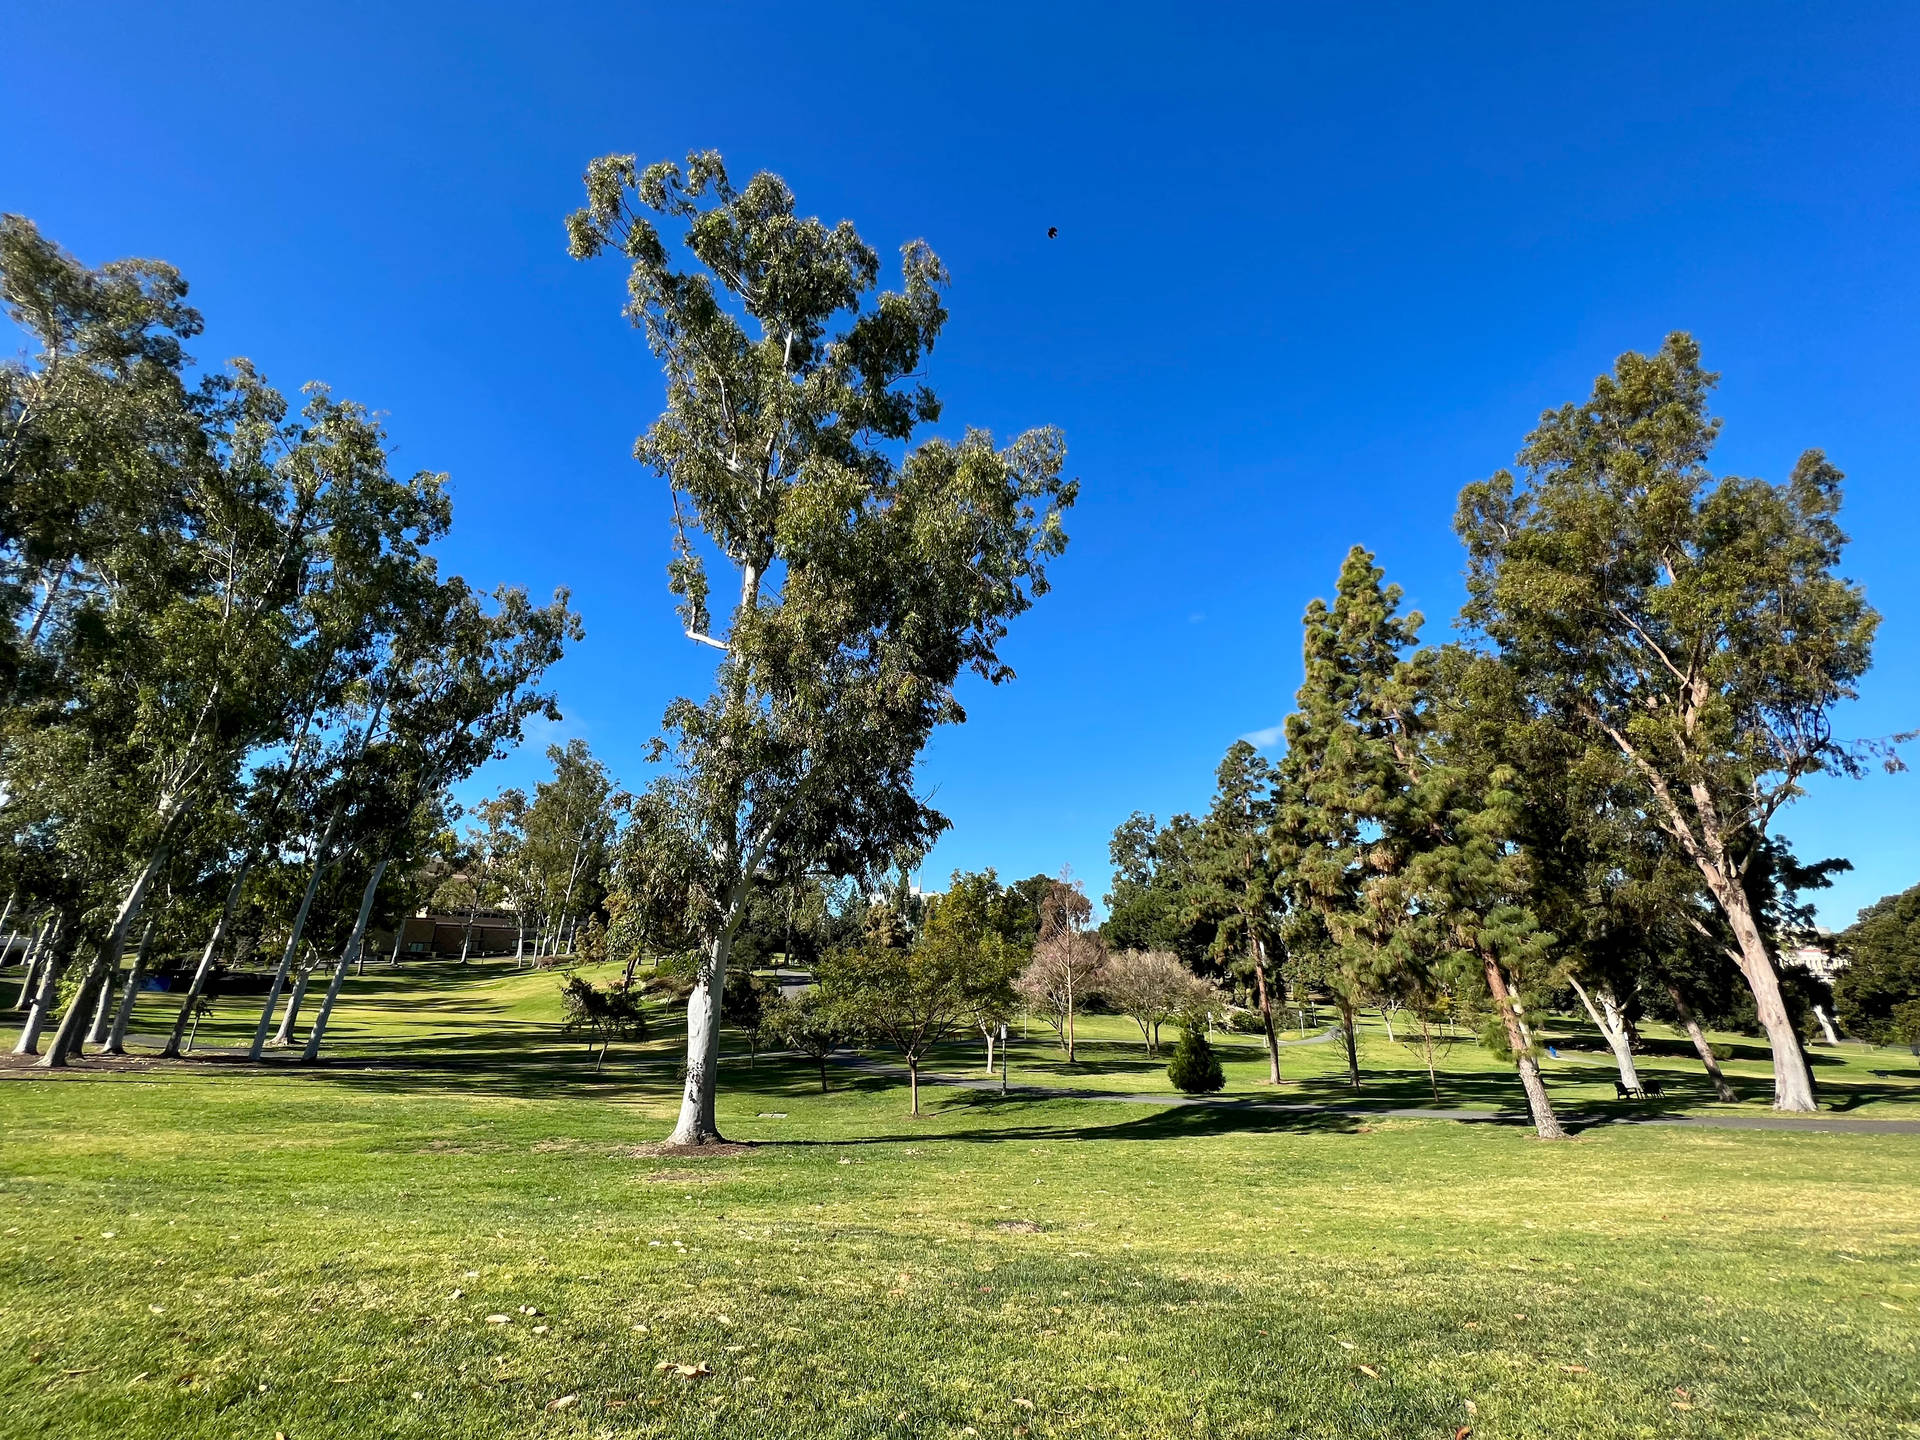 University Grounds With Eucalyptus Trees